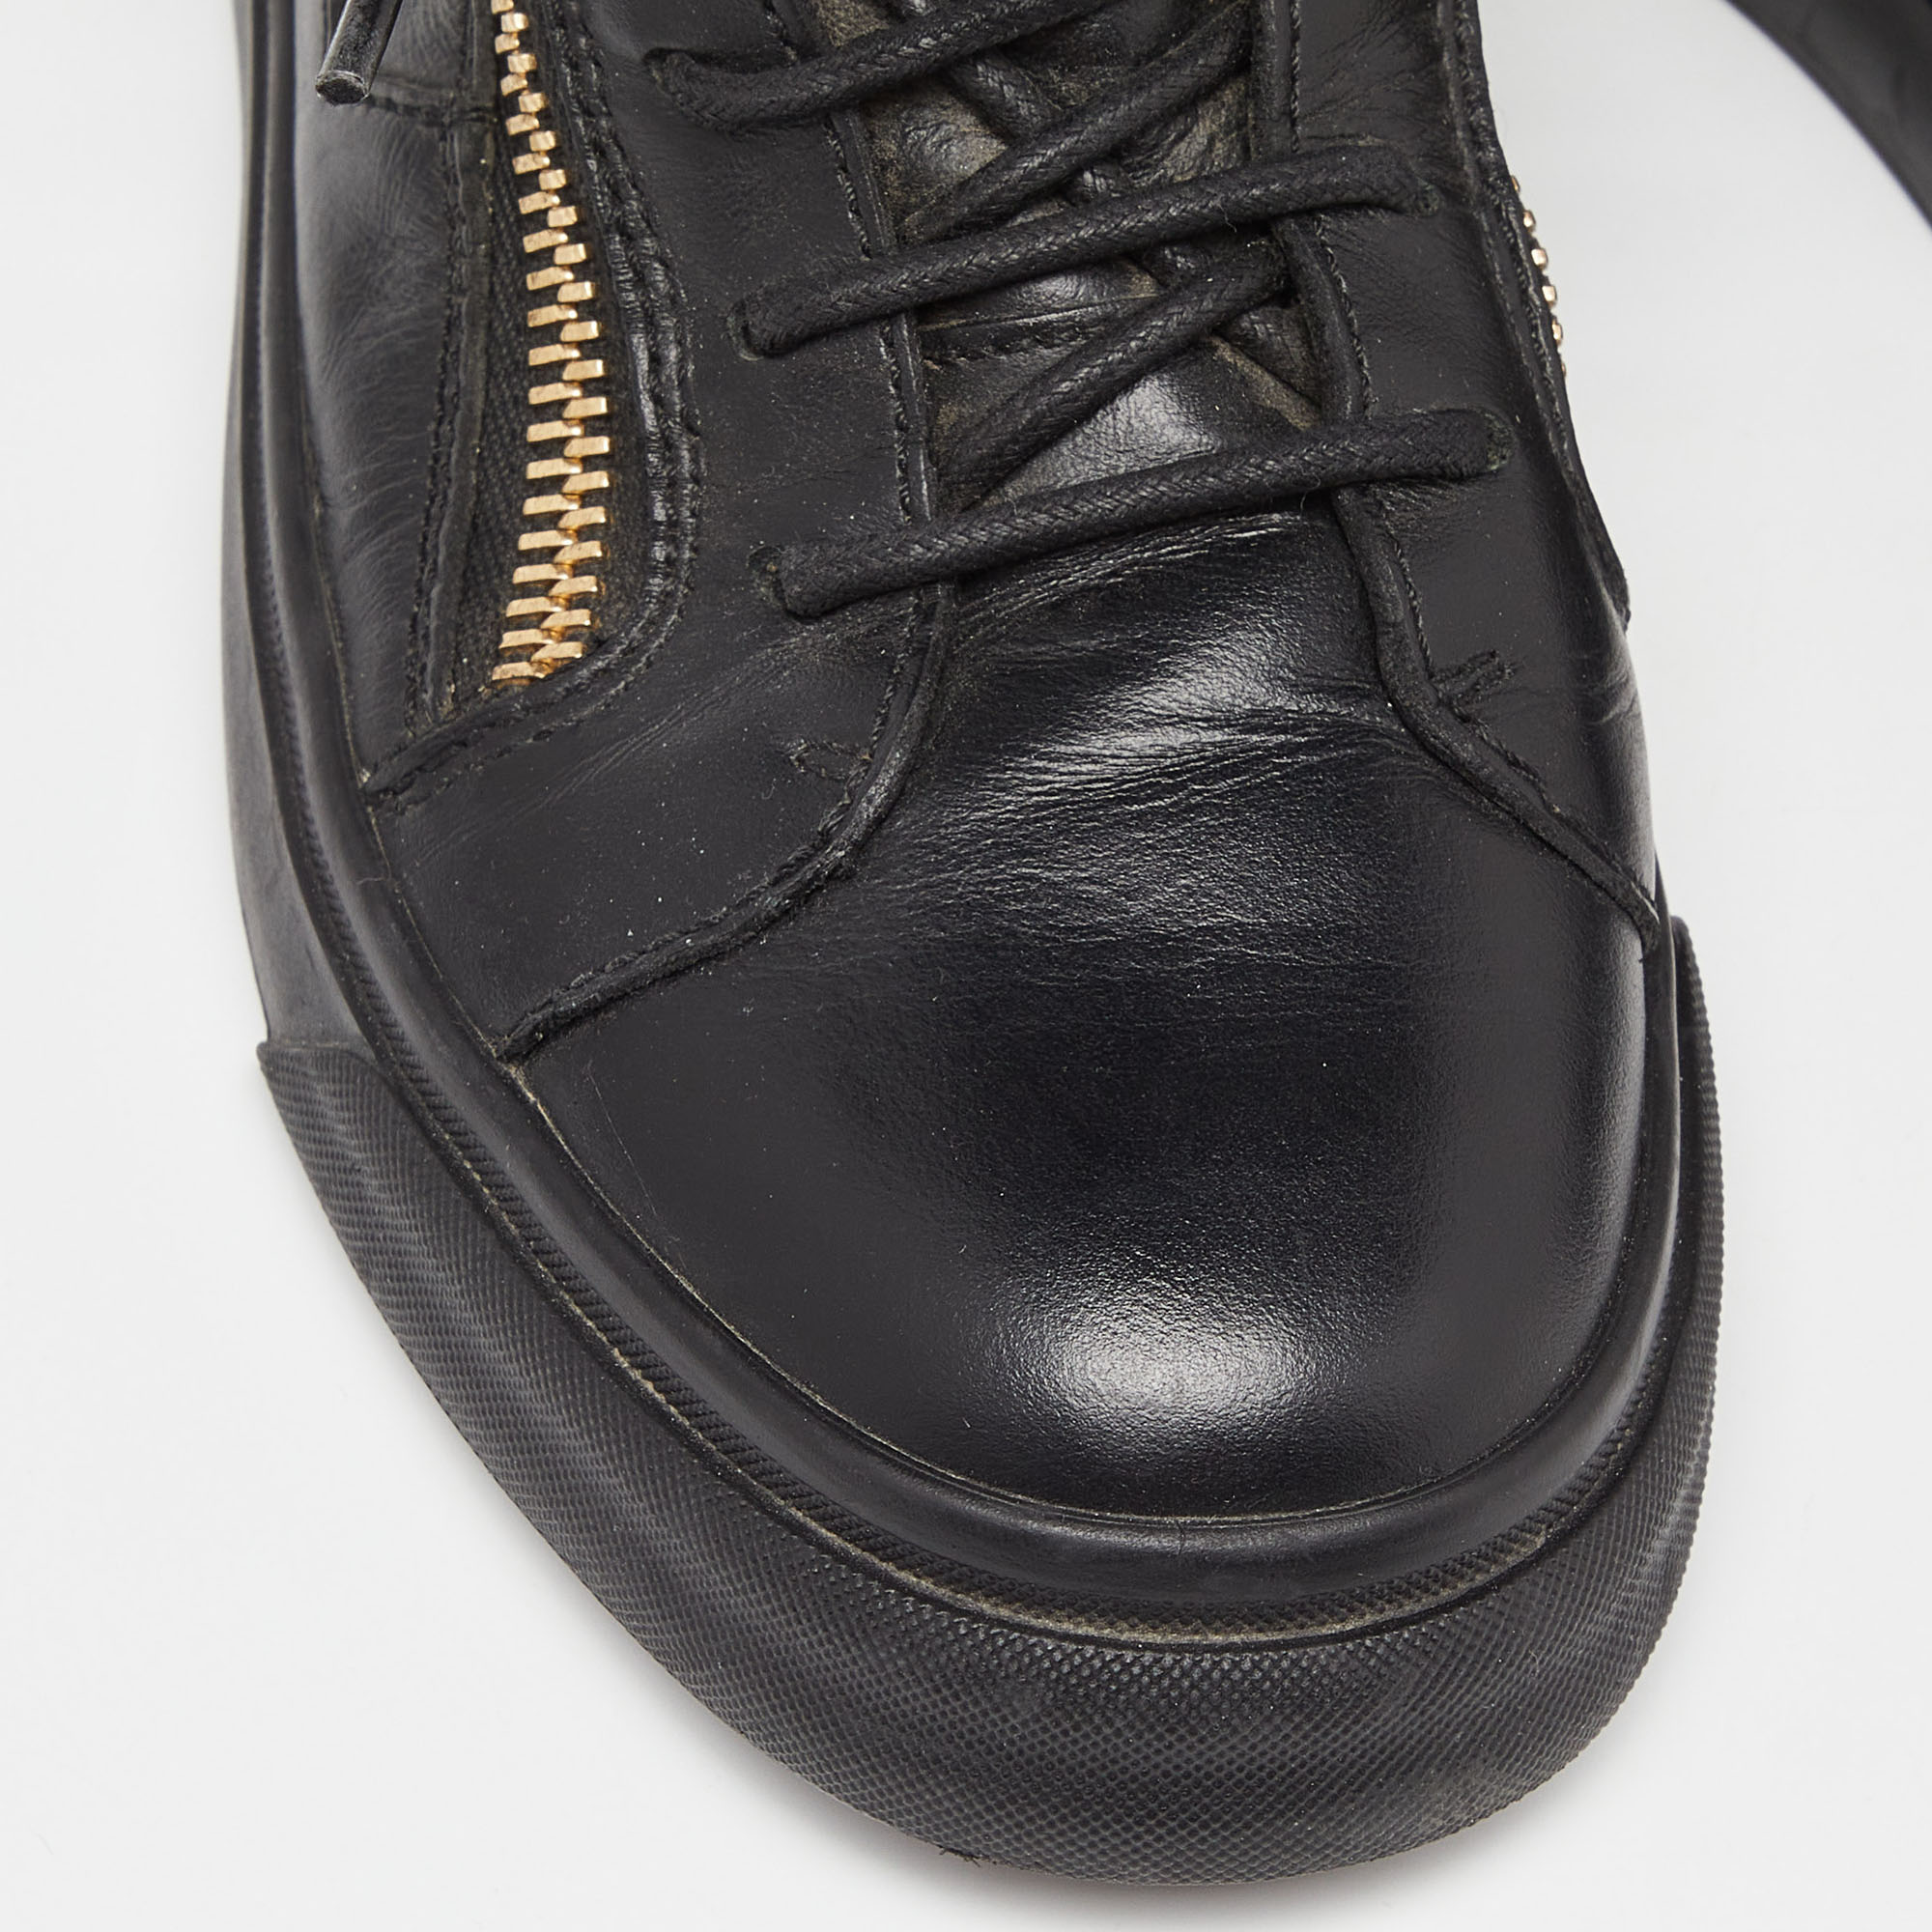 Giuseppe Zanotti Black Leather London High-Top Sneakers Size 37